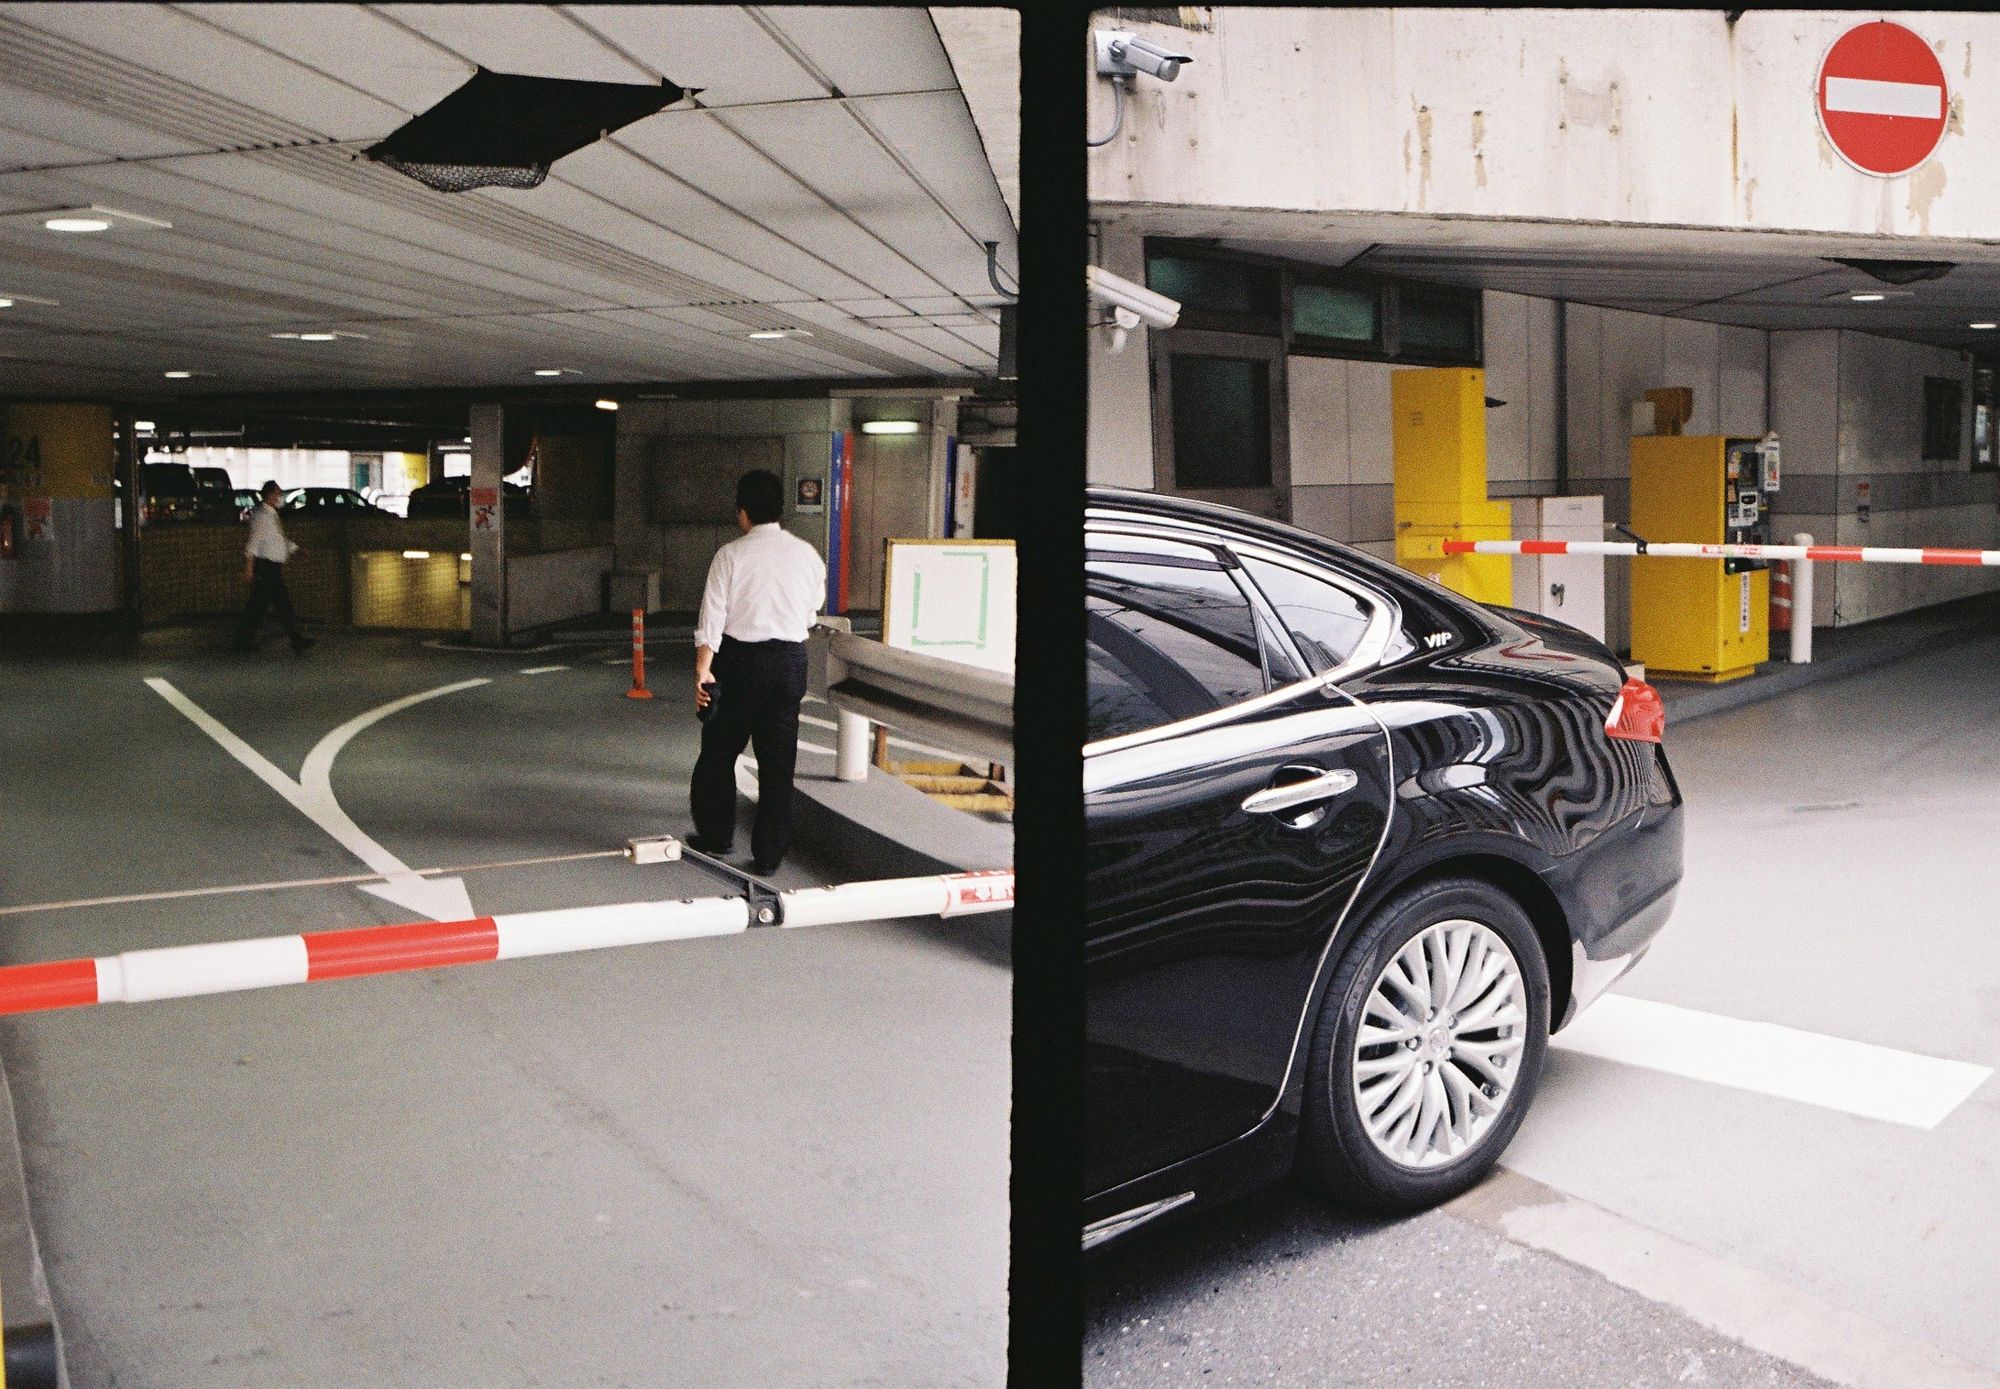 Parking in Tokyo [Olympus pen ee3, Kodak Gold]